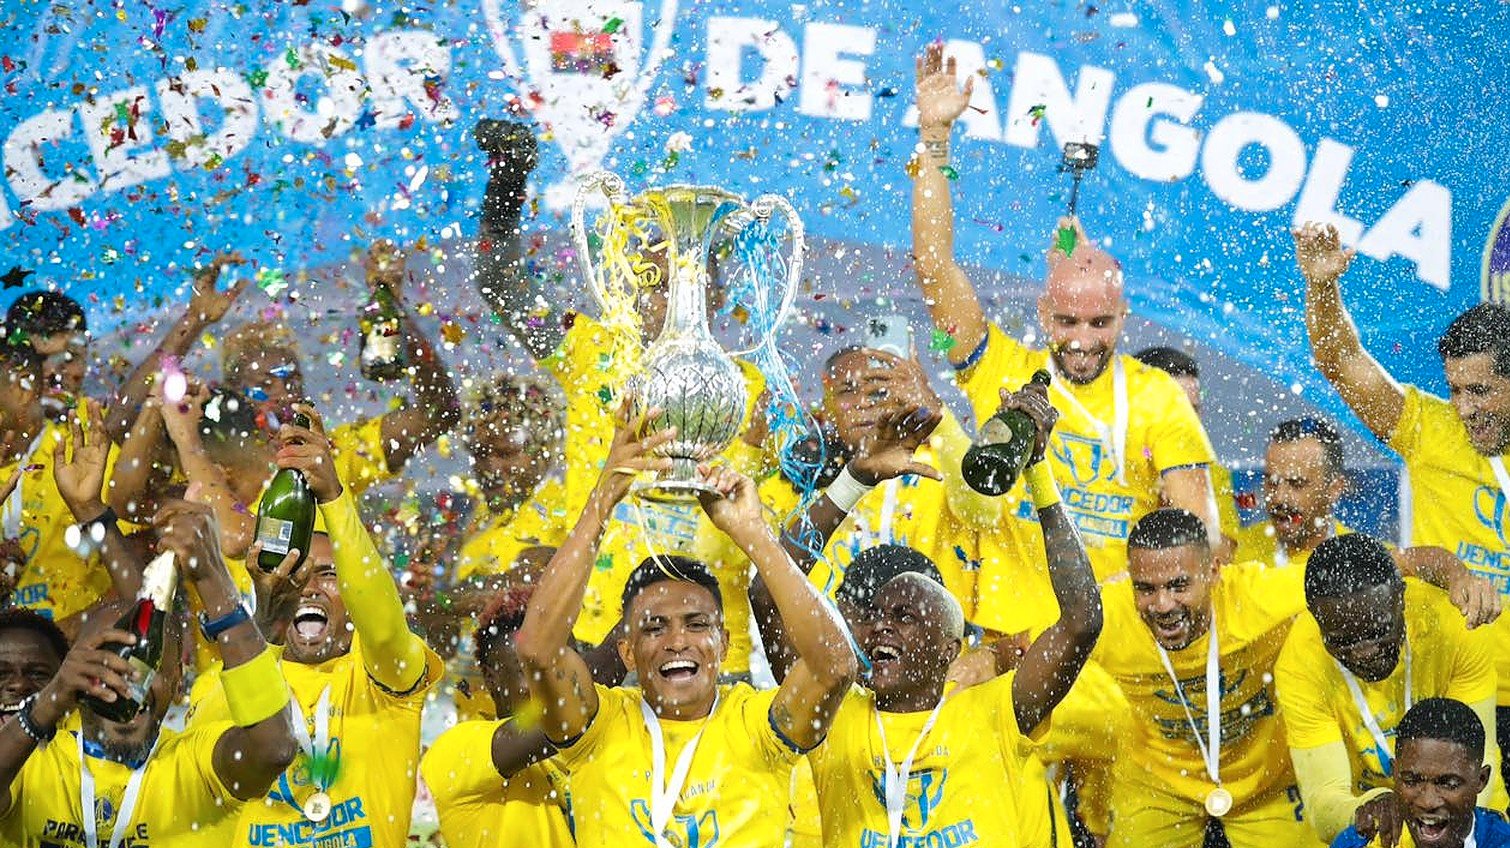 Petro de Luanda - Deu inicio hoje o campeonato nacional de